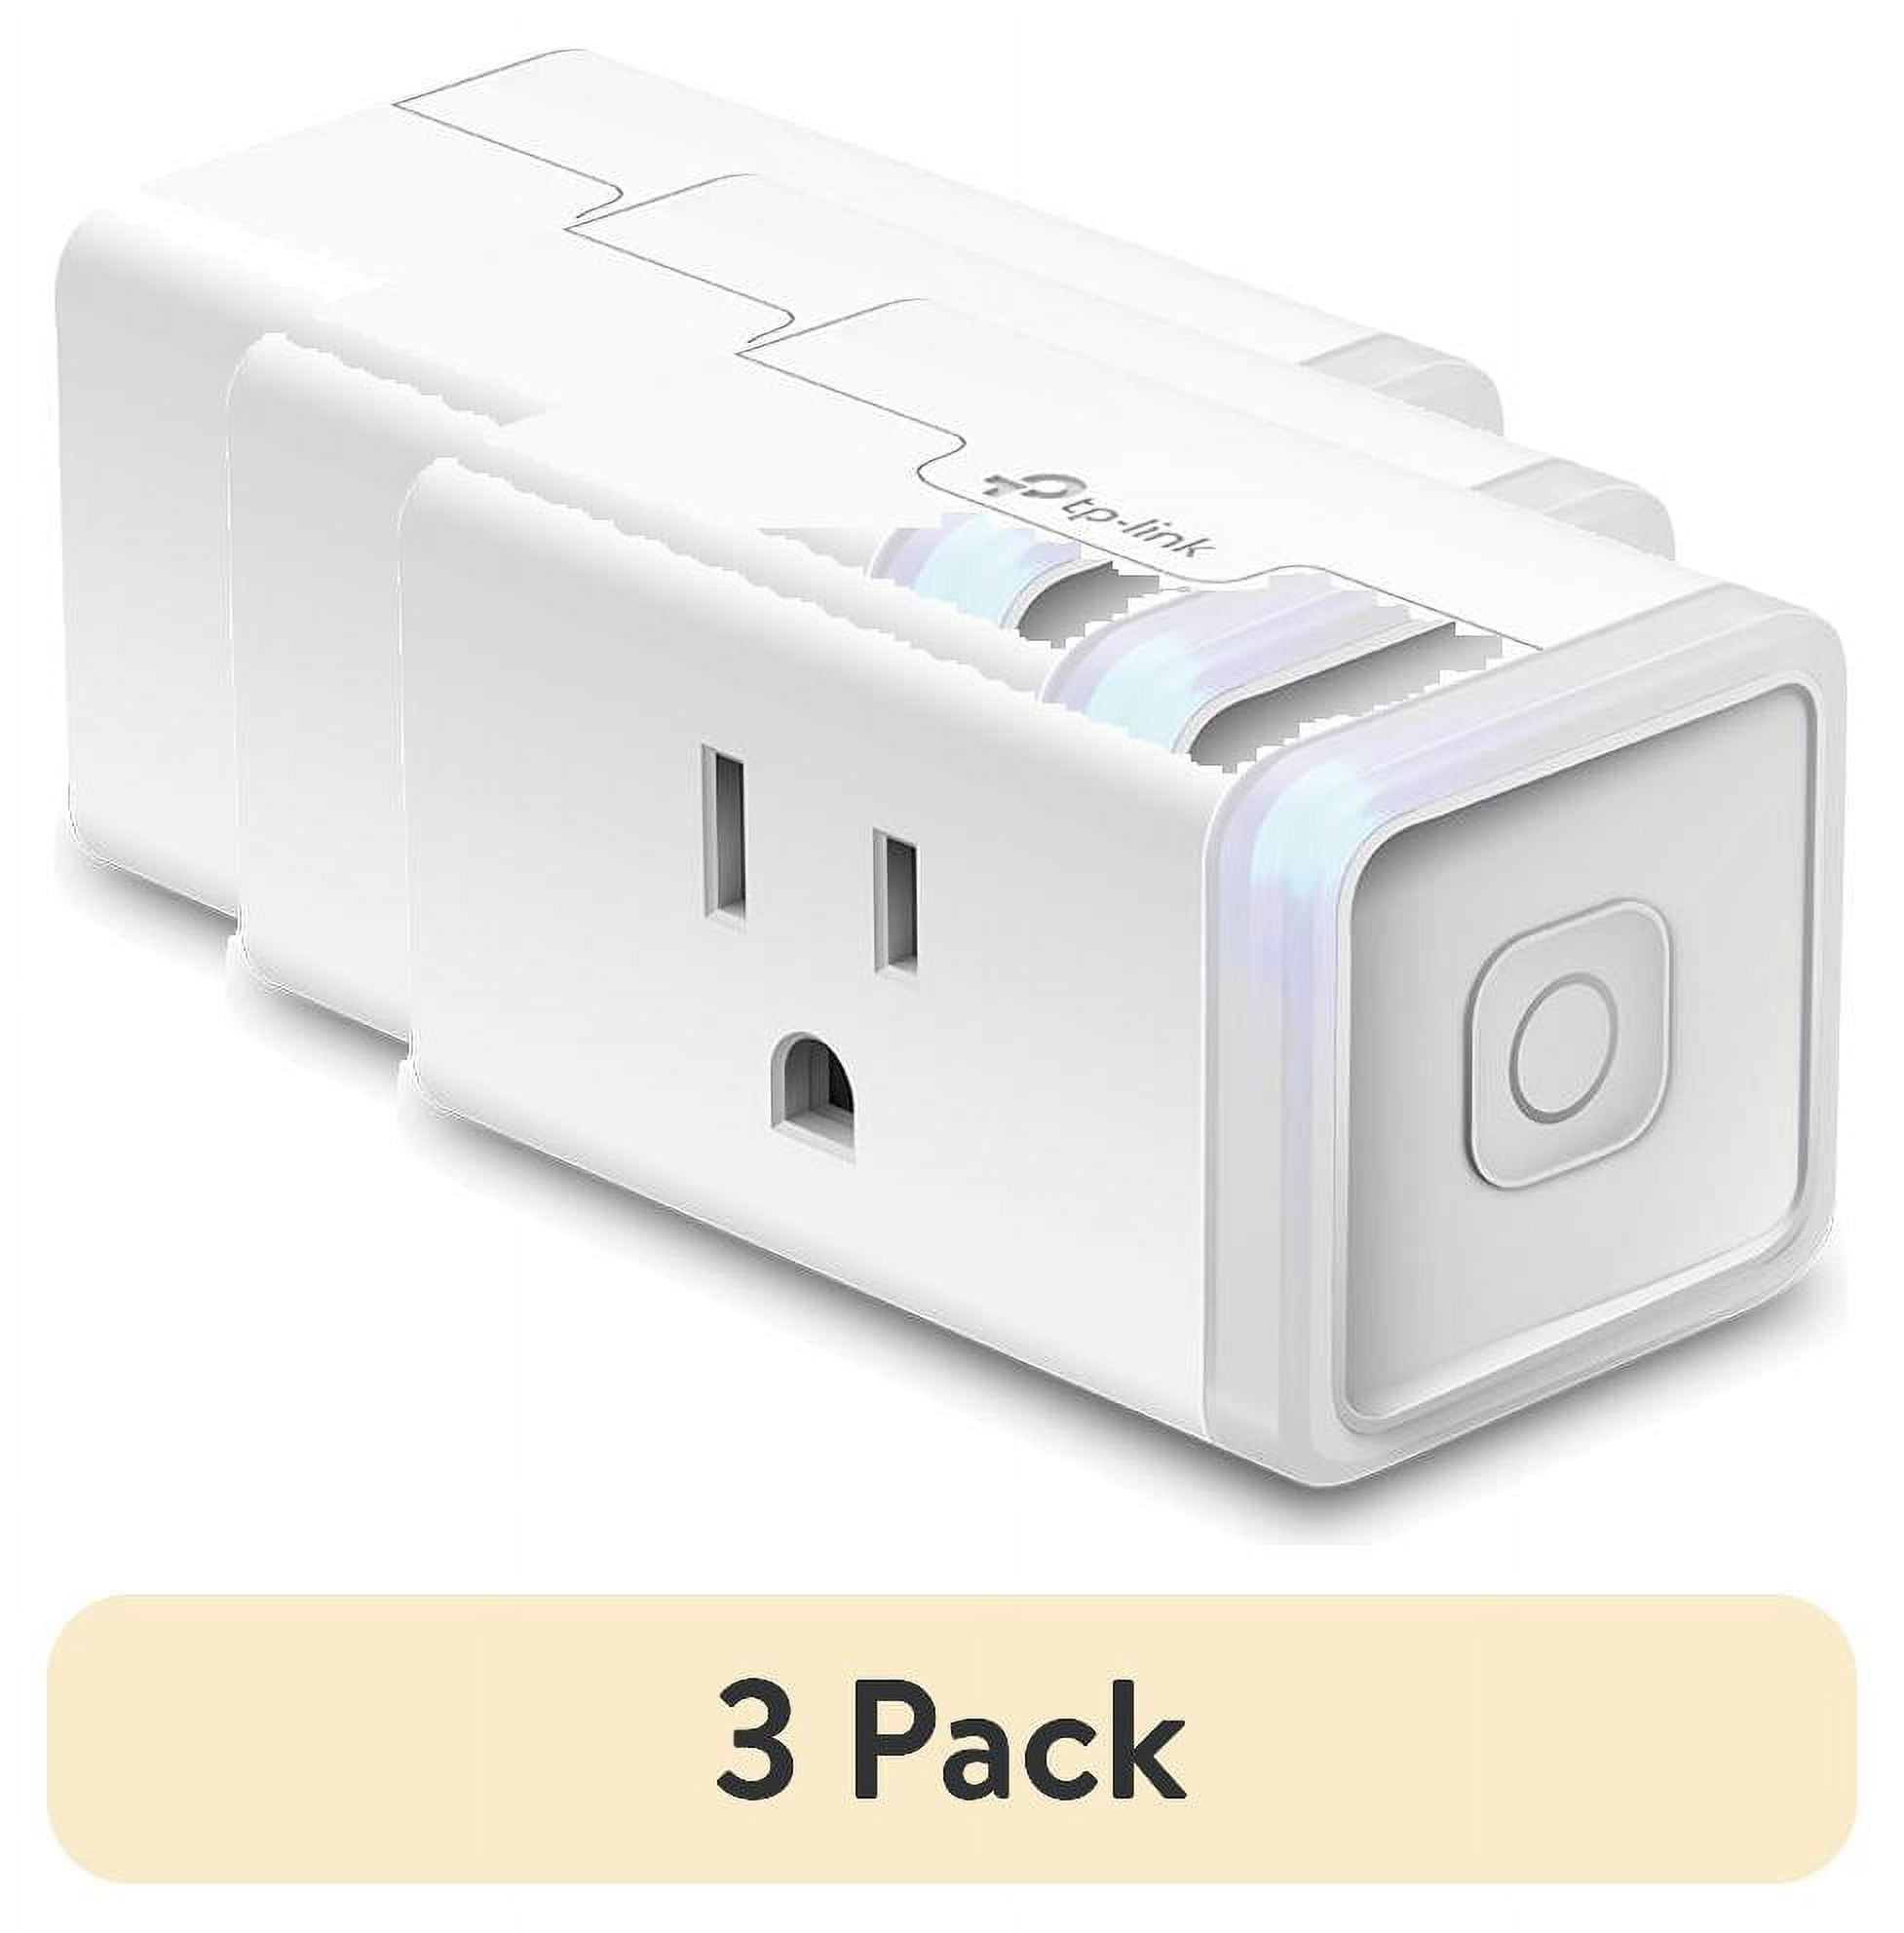 3 pack) TP-Link KP125  Kasa Smart WiFi Plug Slim with Energy